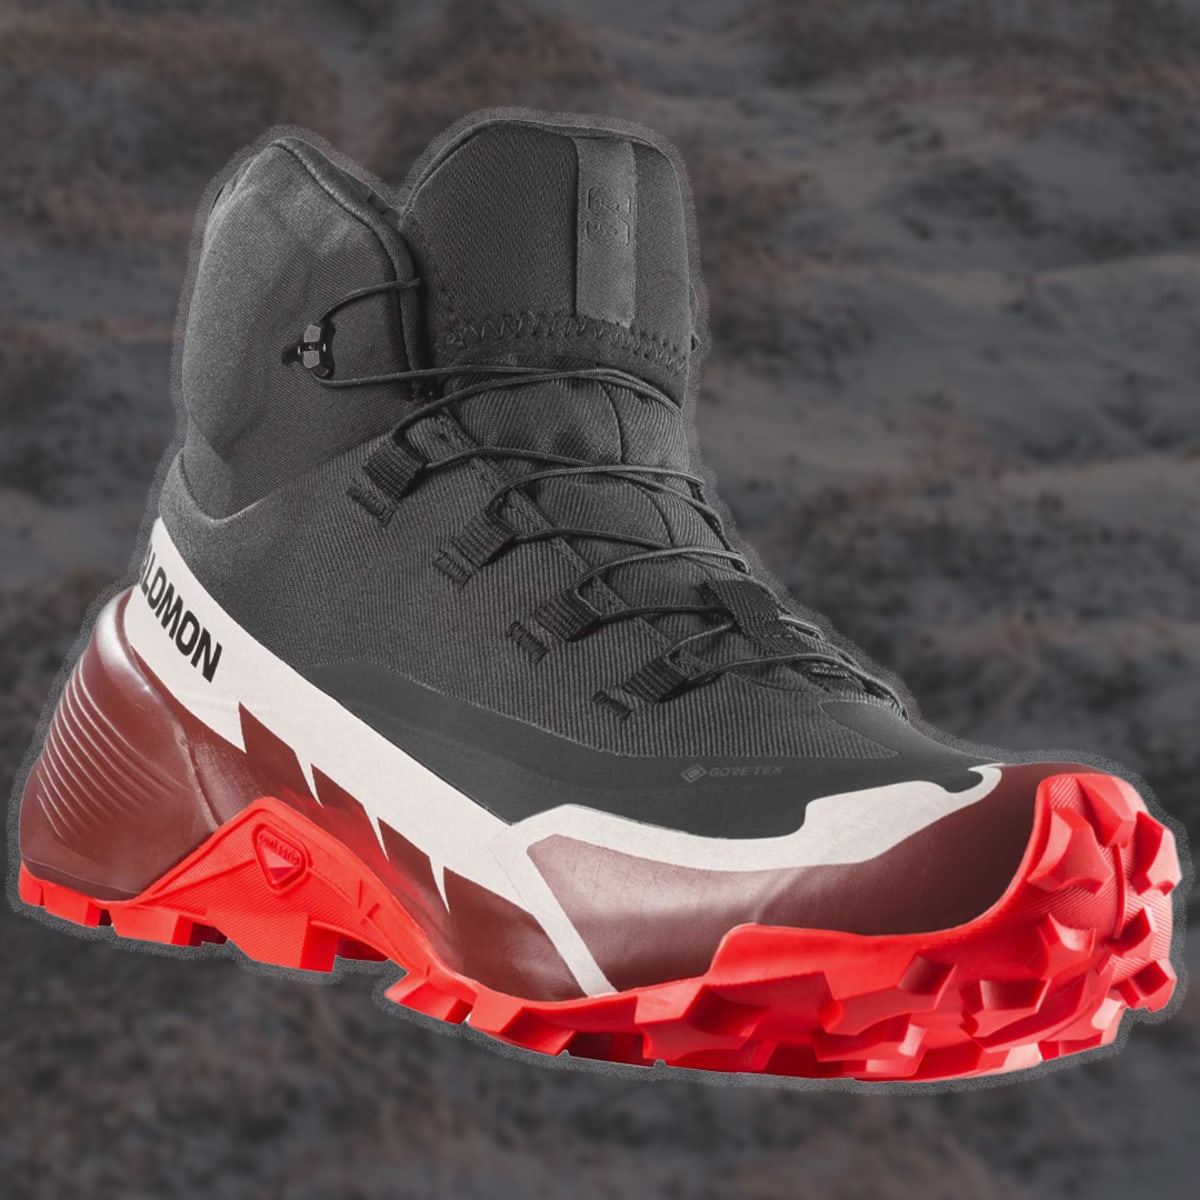 Salomon Men's Onis Mid GORE-TEX® Hiking Boots